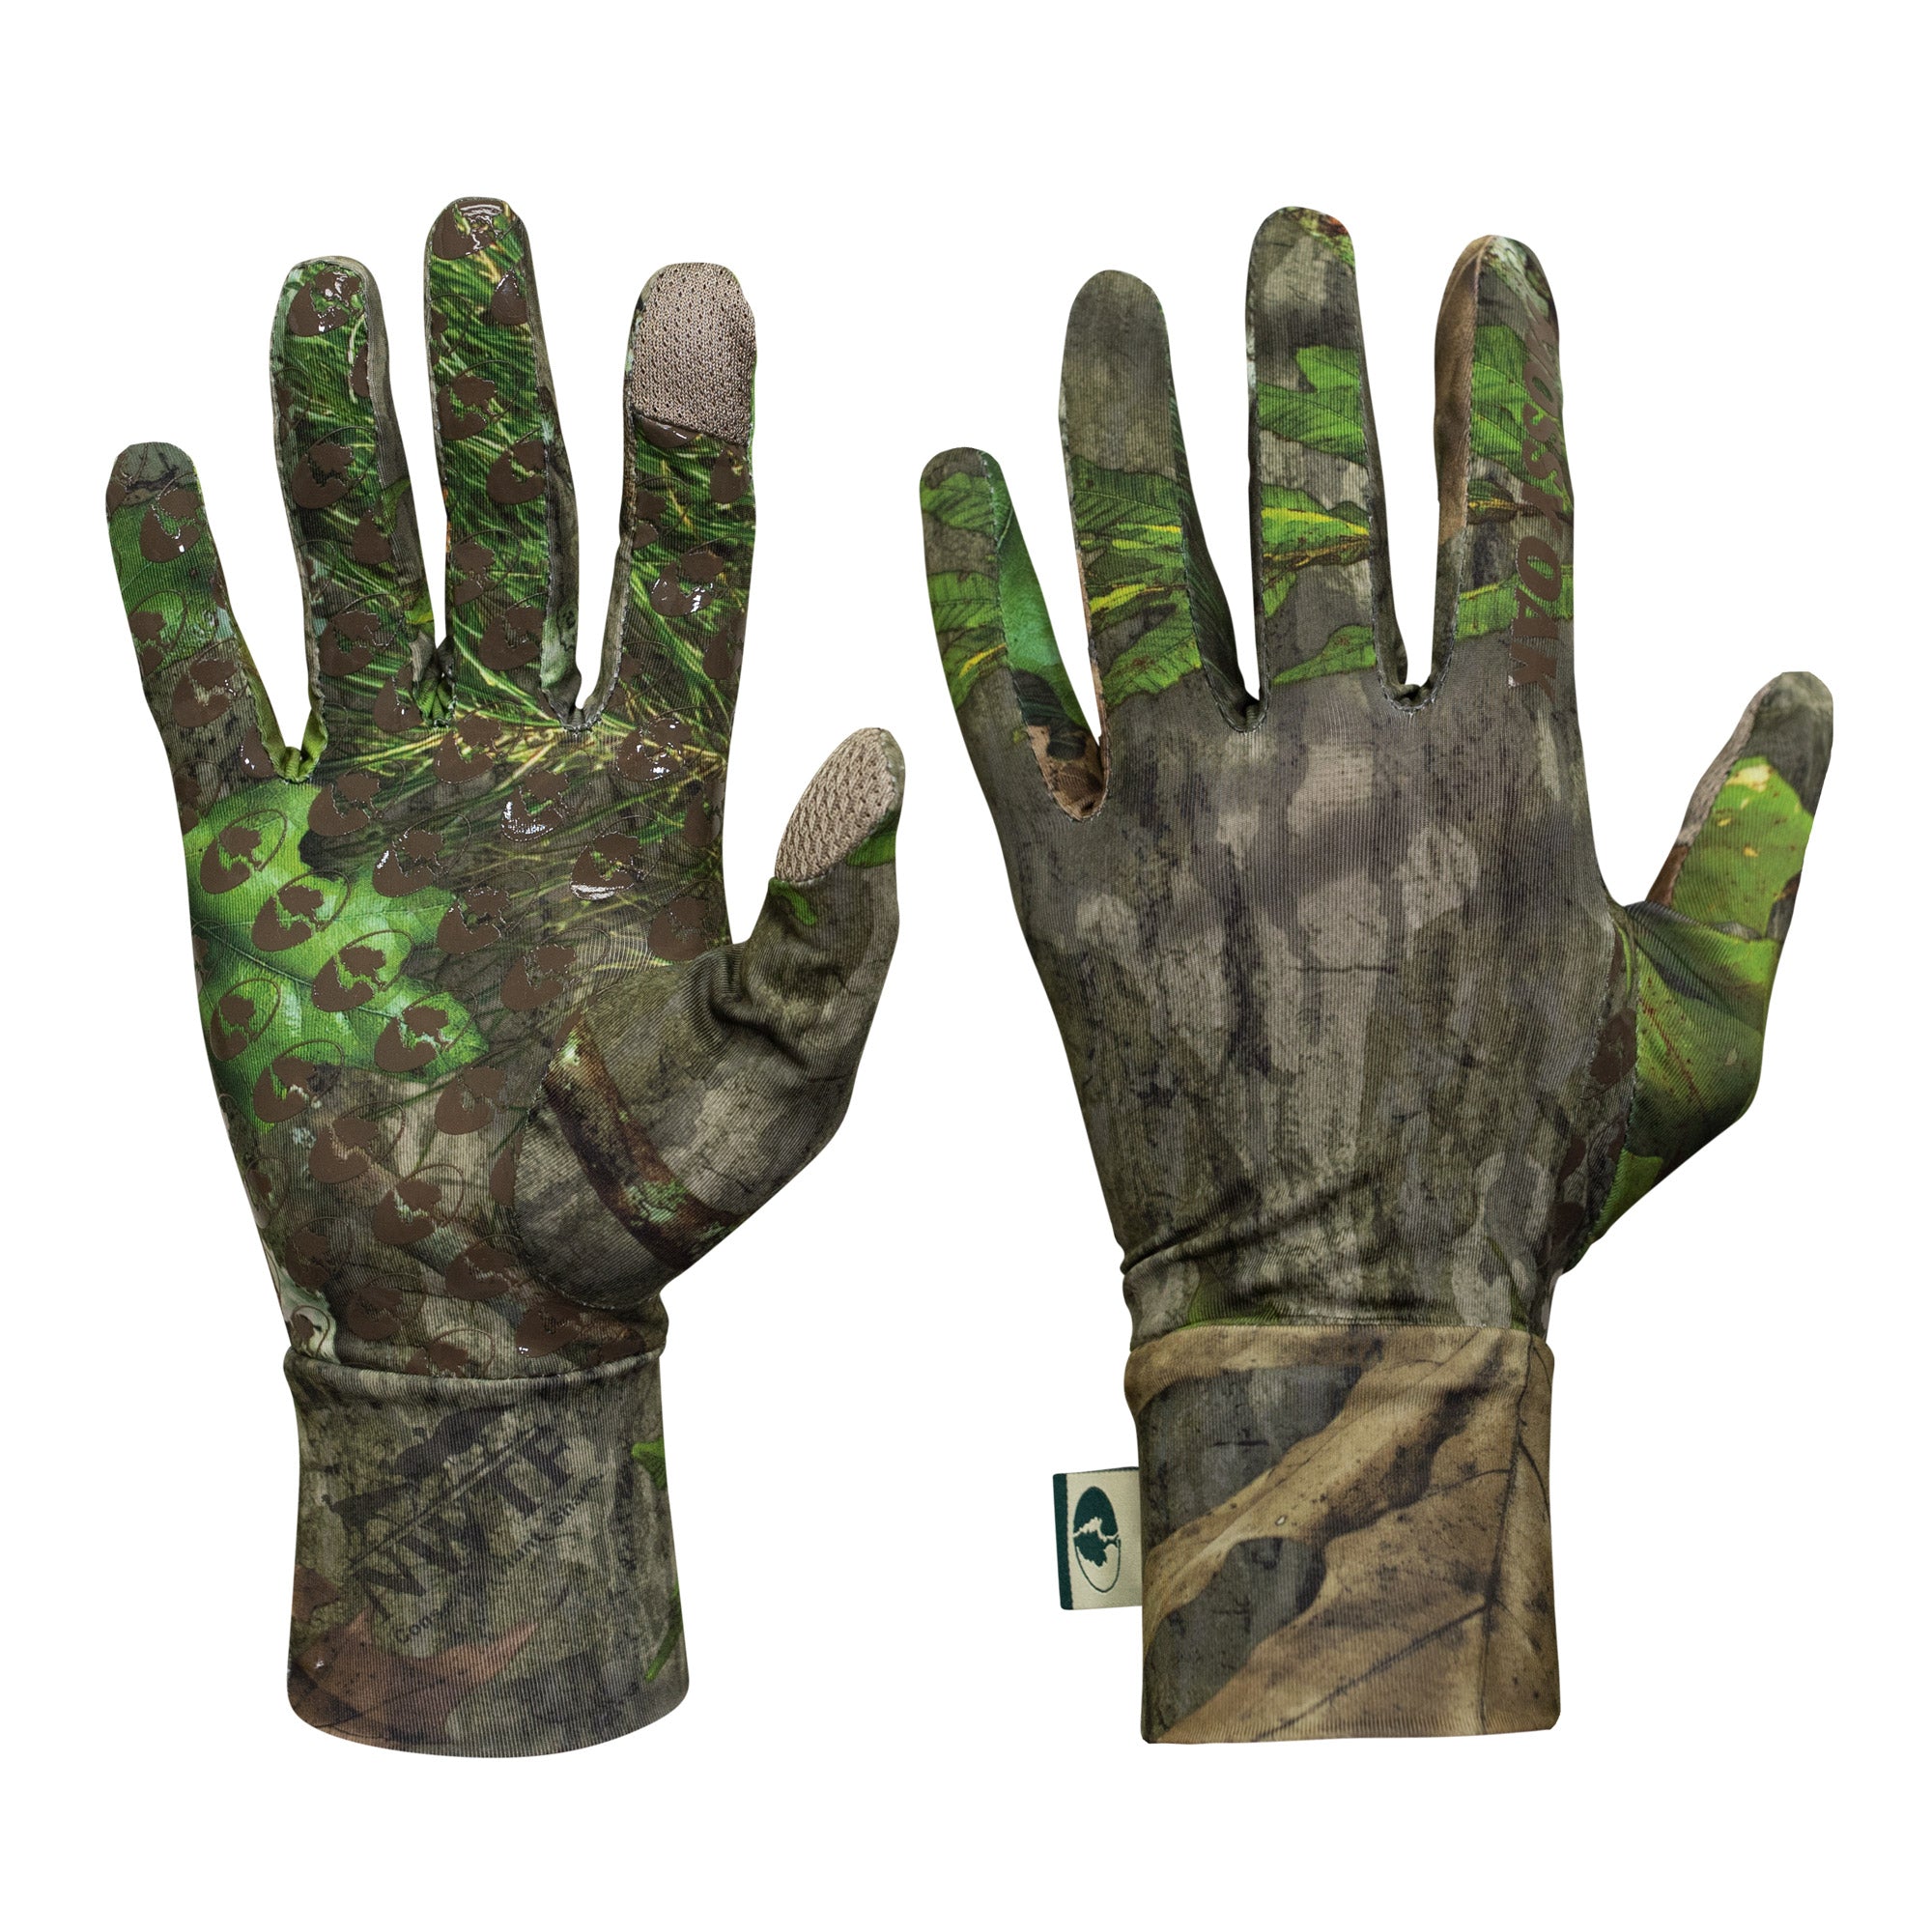 Tibbee Flex Grip Turkey Hunting Gloves – The Mossy Oak Store